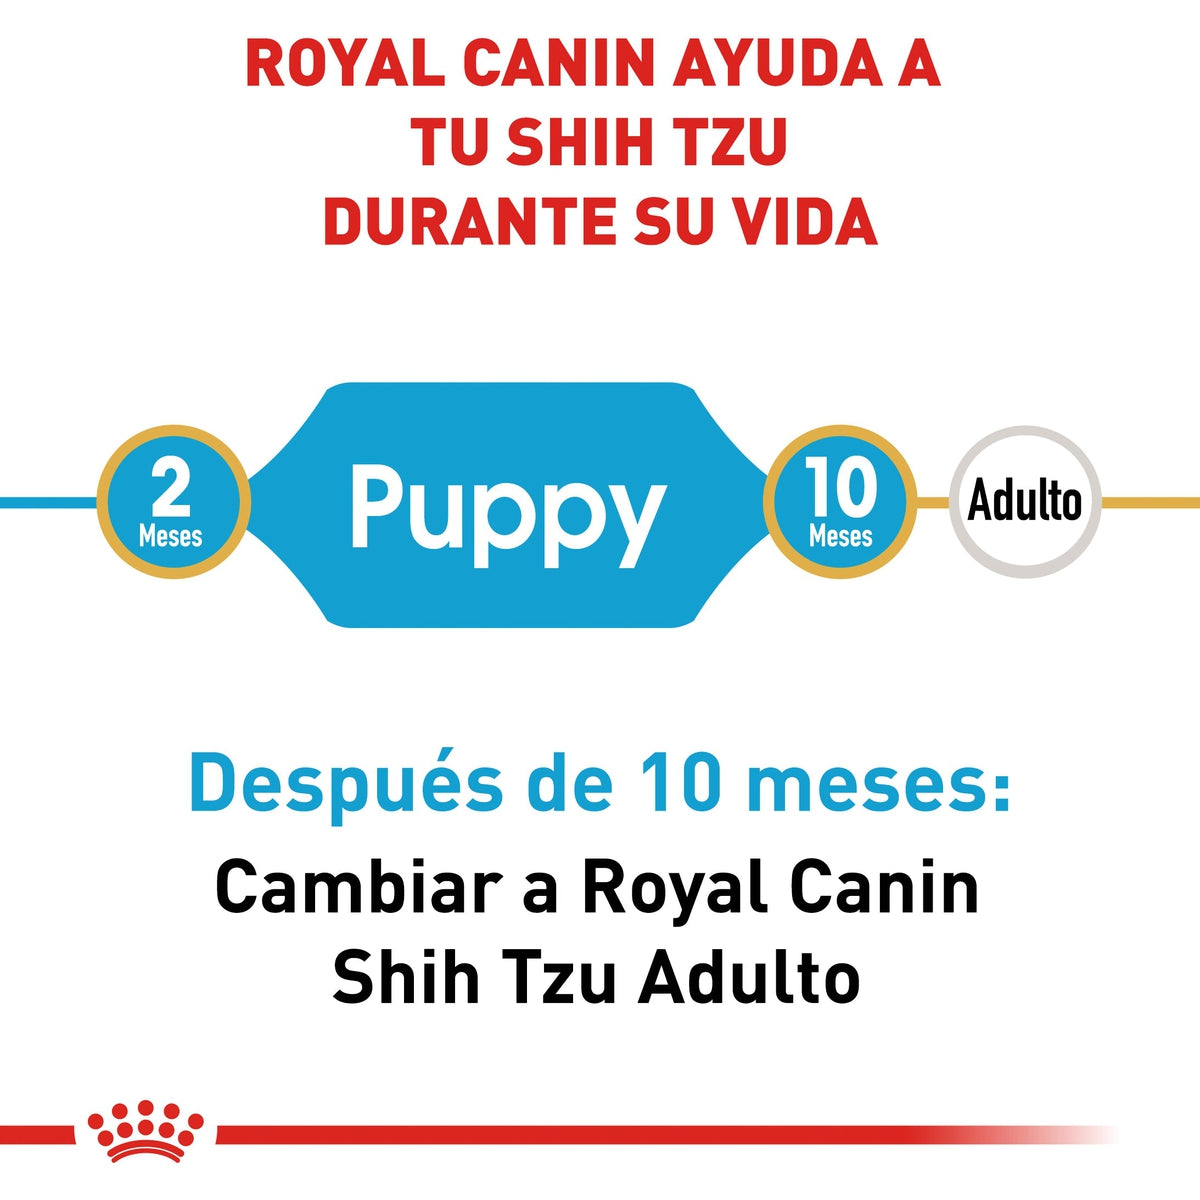 Alimento para Perro Royal Canin BHN Shih Tzu Puppy 24